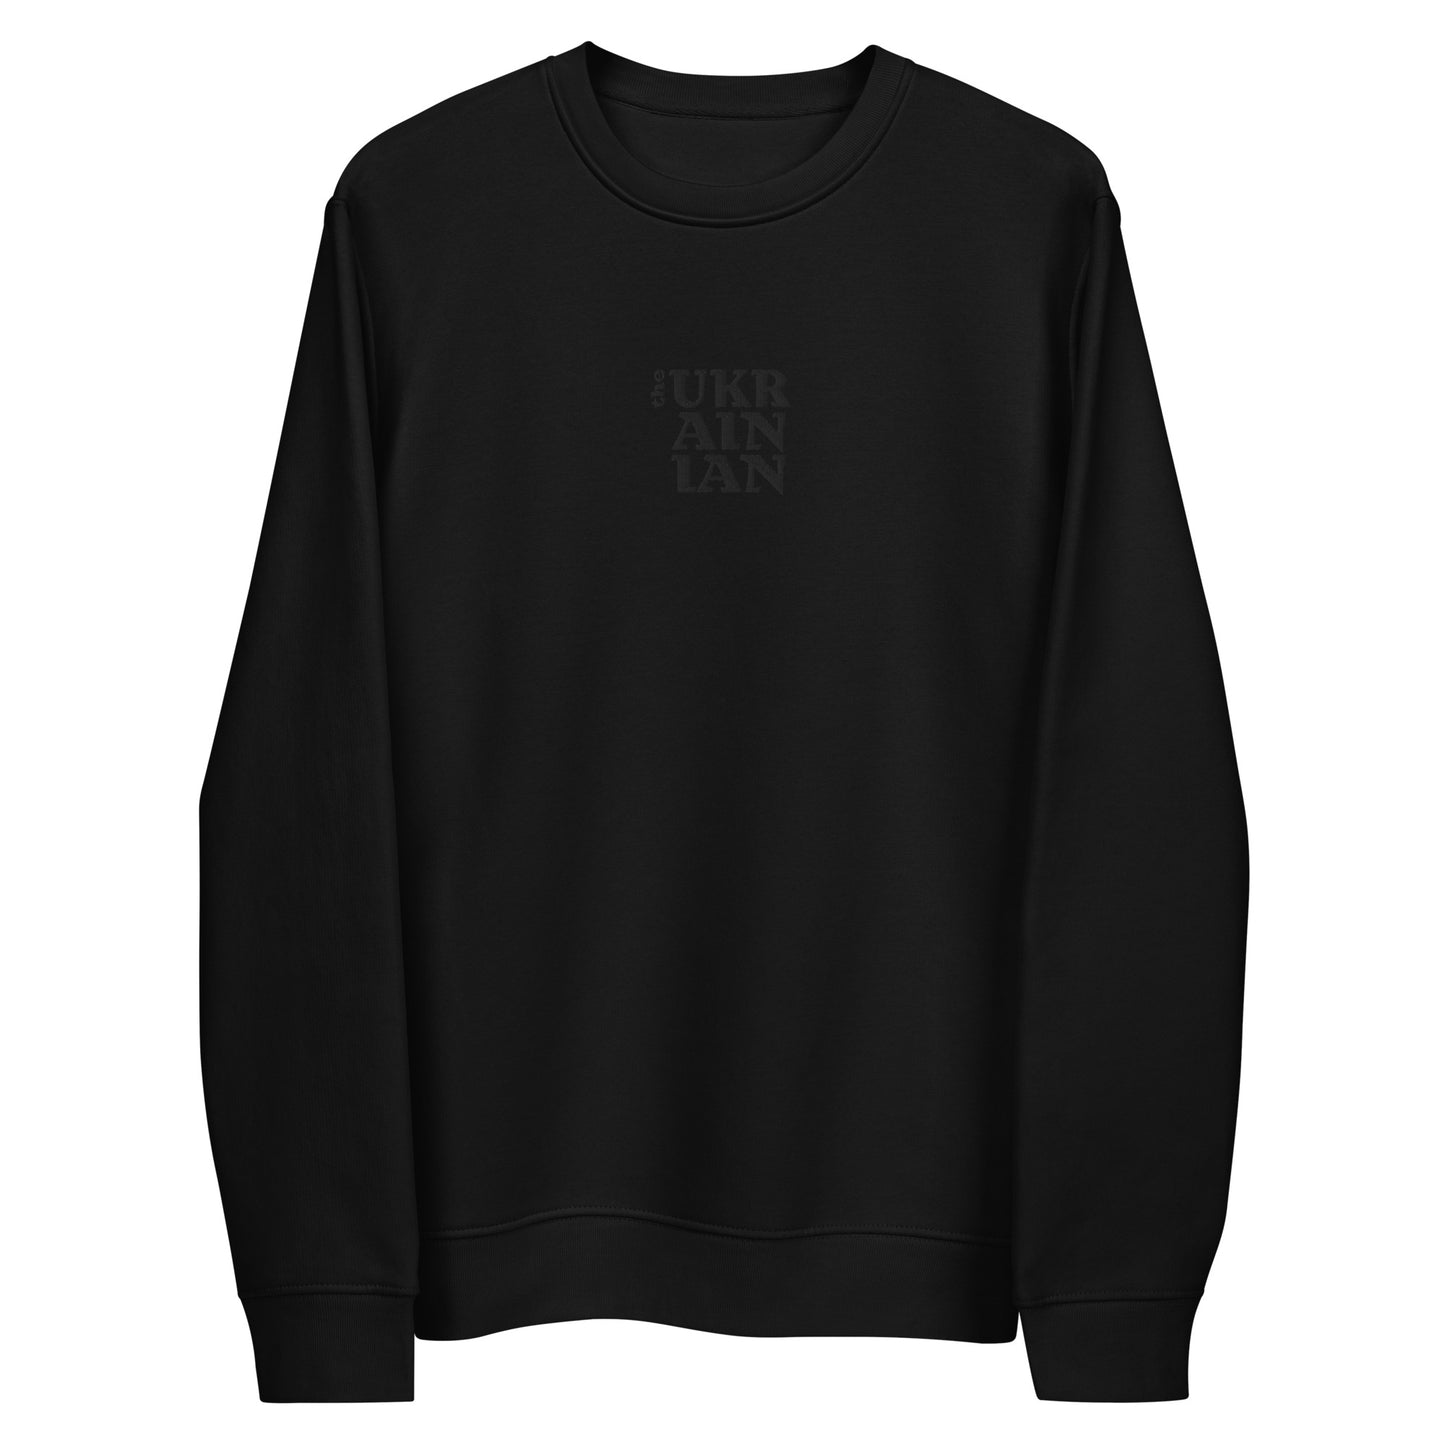 The Ukrainian embroidered unisex eco sweatshirt in black